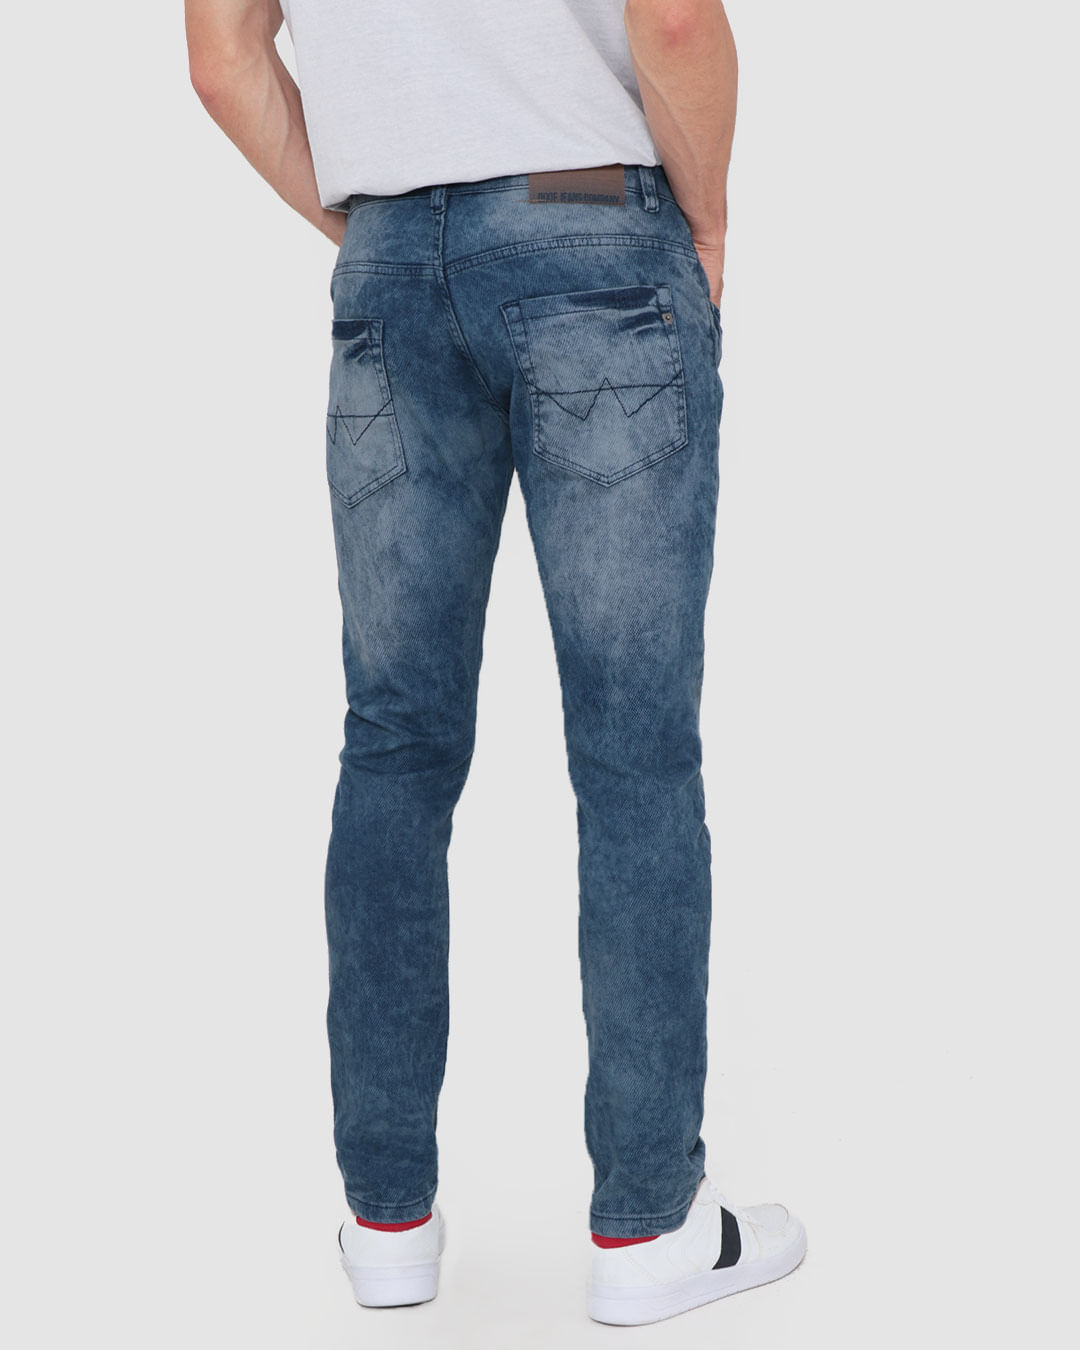 23221000408045-blue-jeans-medio-3